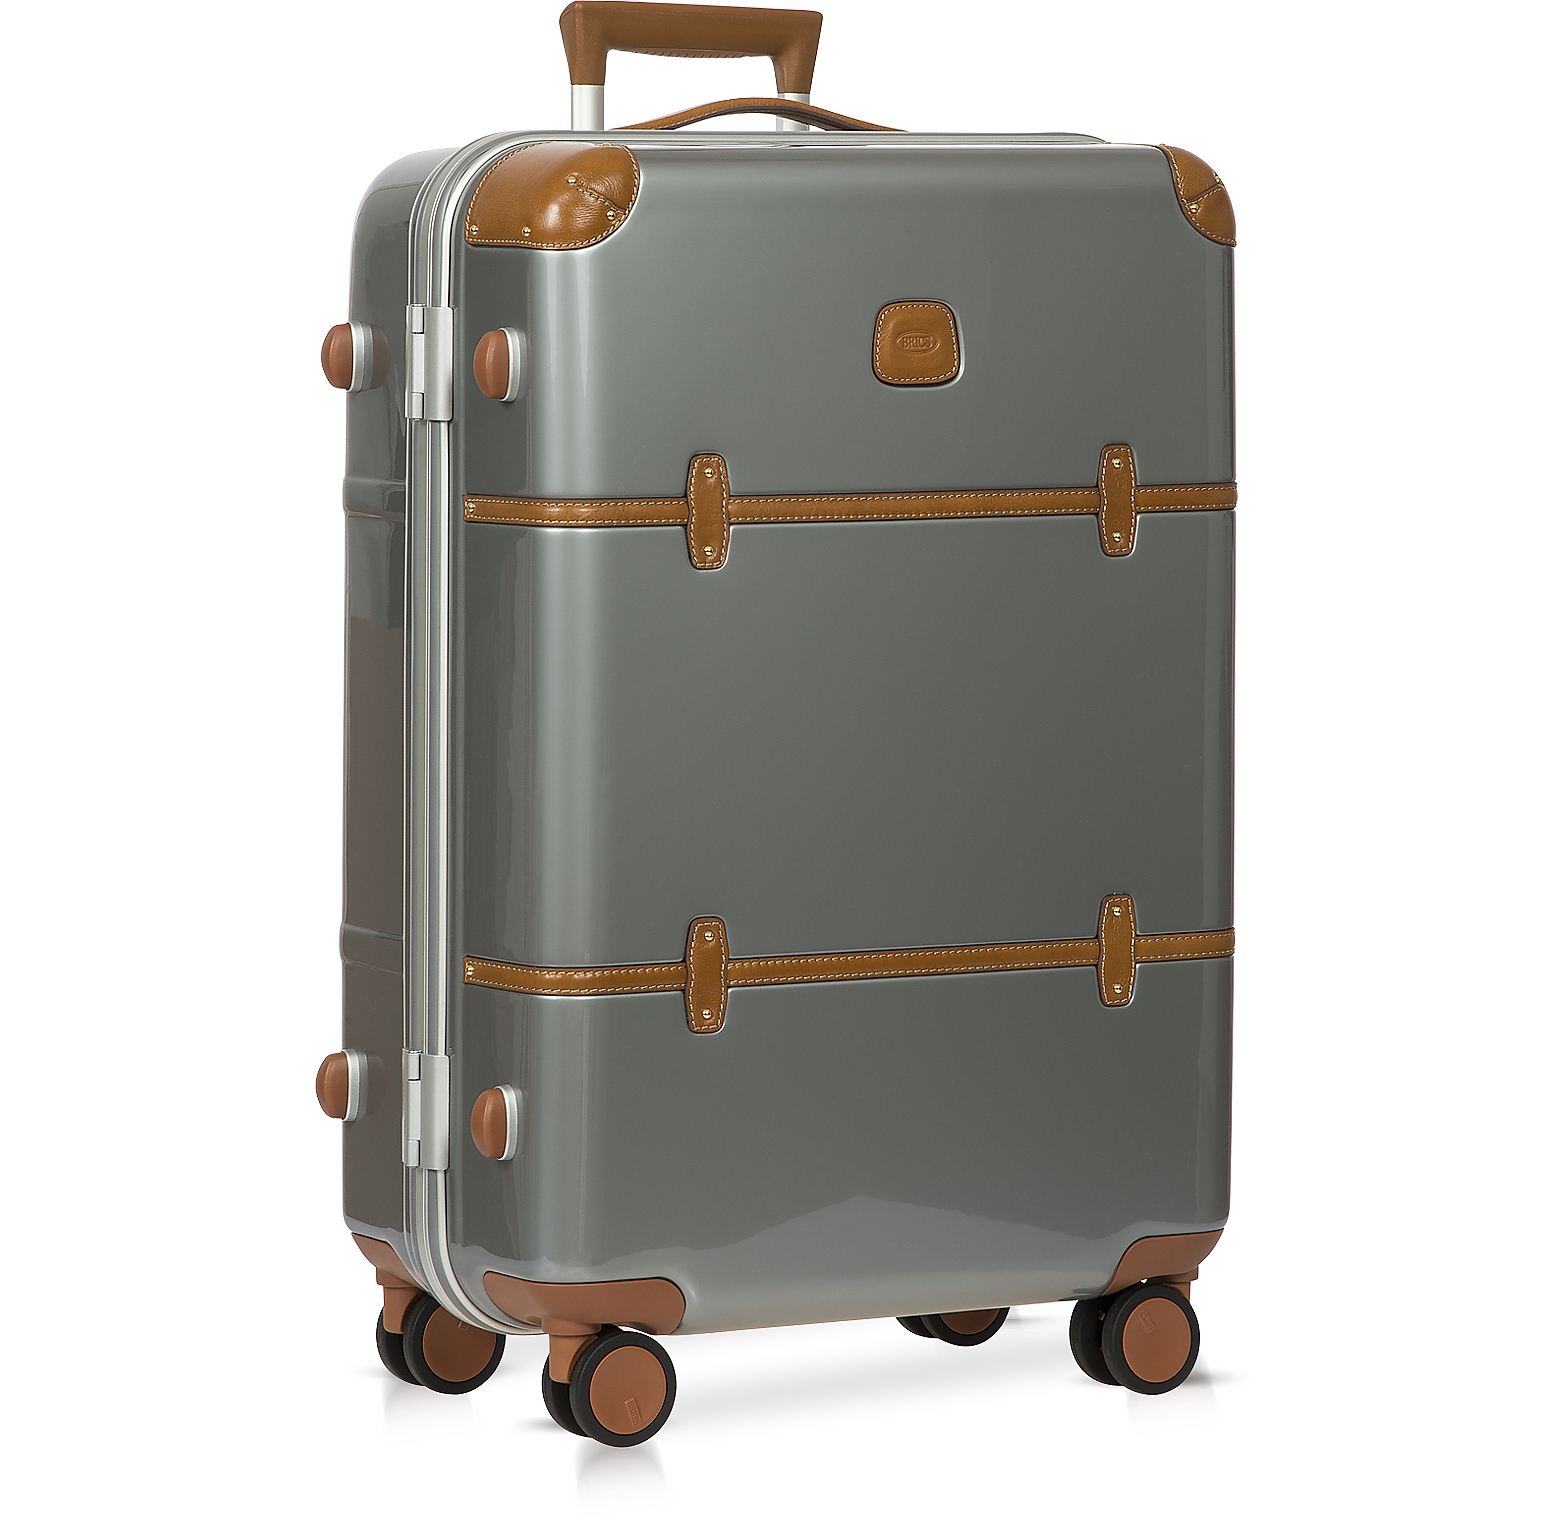 Best Luxury Luggage For Travelers | IQS Executive